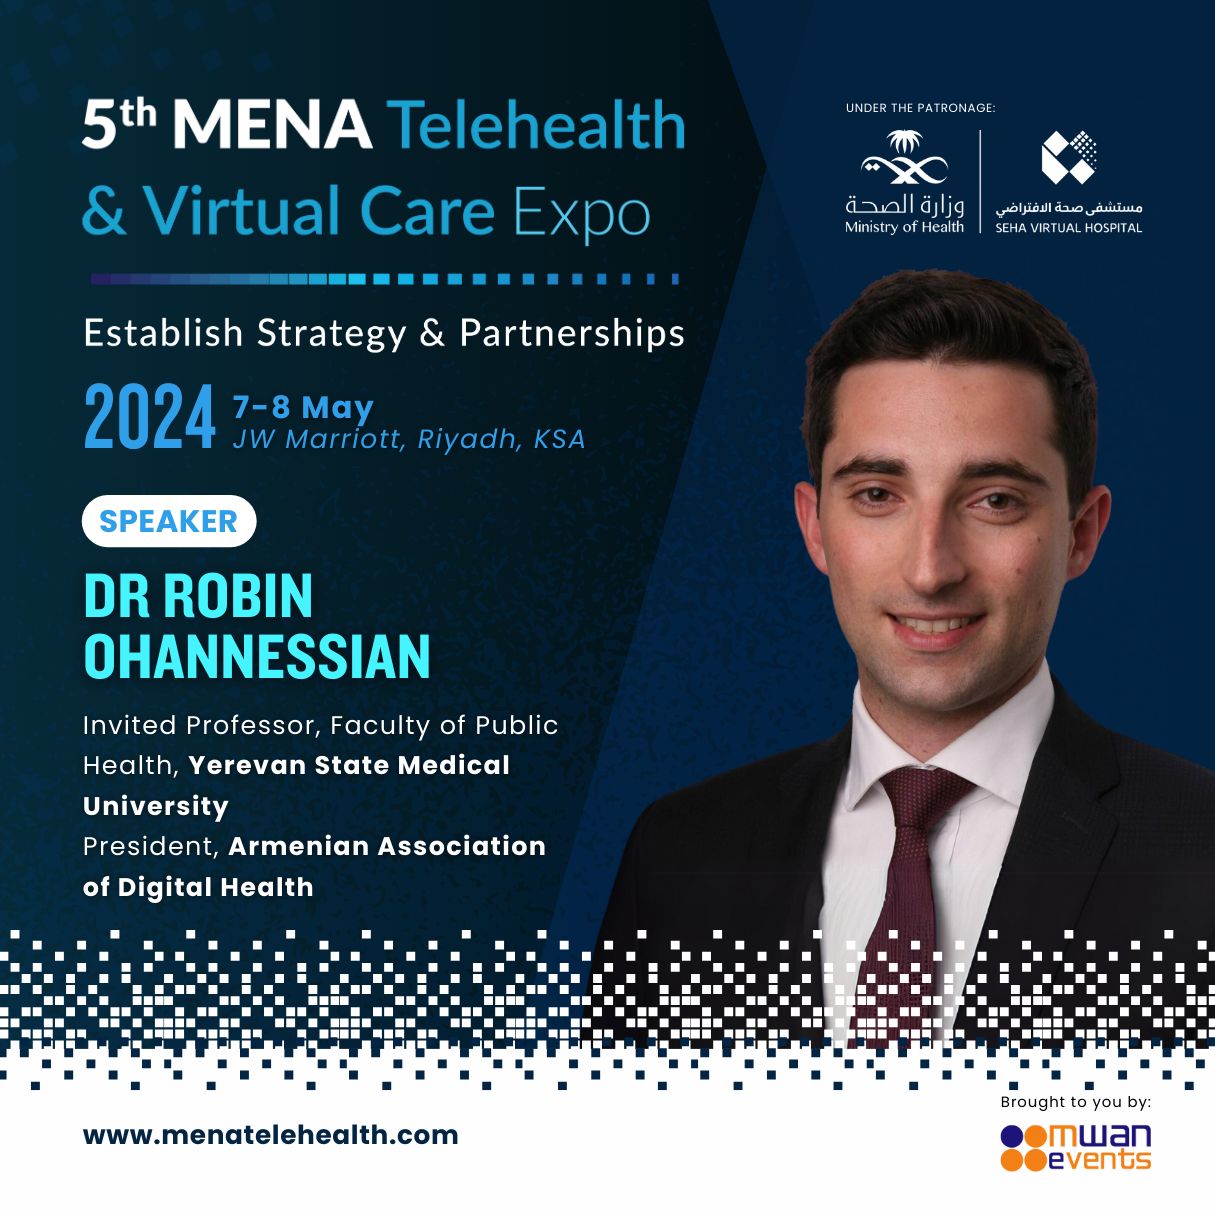 Robin Vicken Ohannessian: I will be a speaker at the 5th MENA Telehealth & Virtual Care Expo